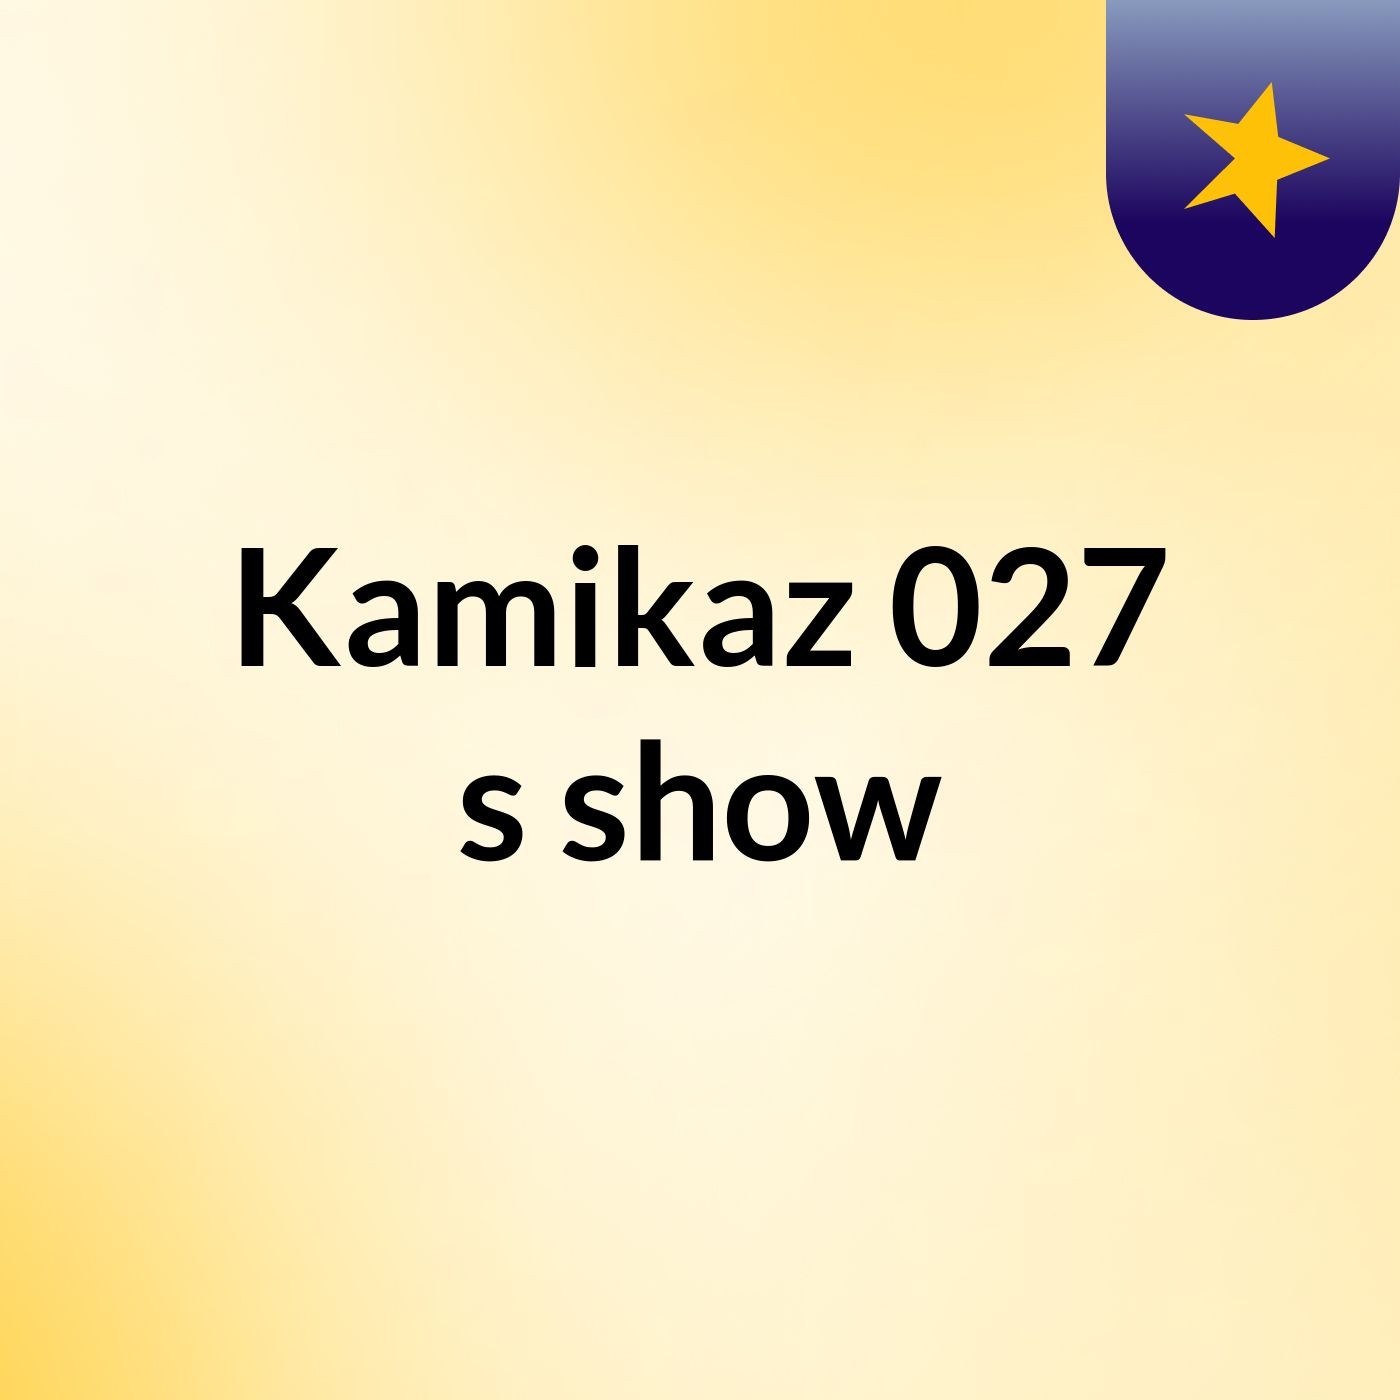 Kamikaz 027's show